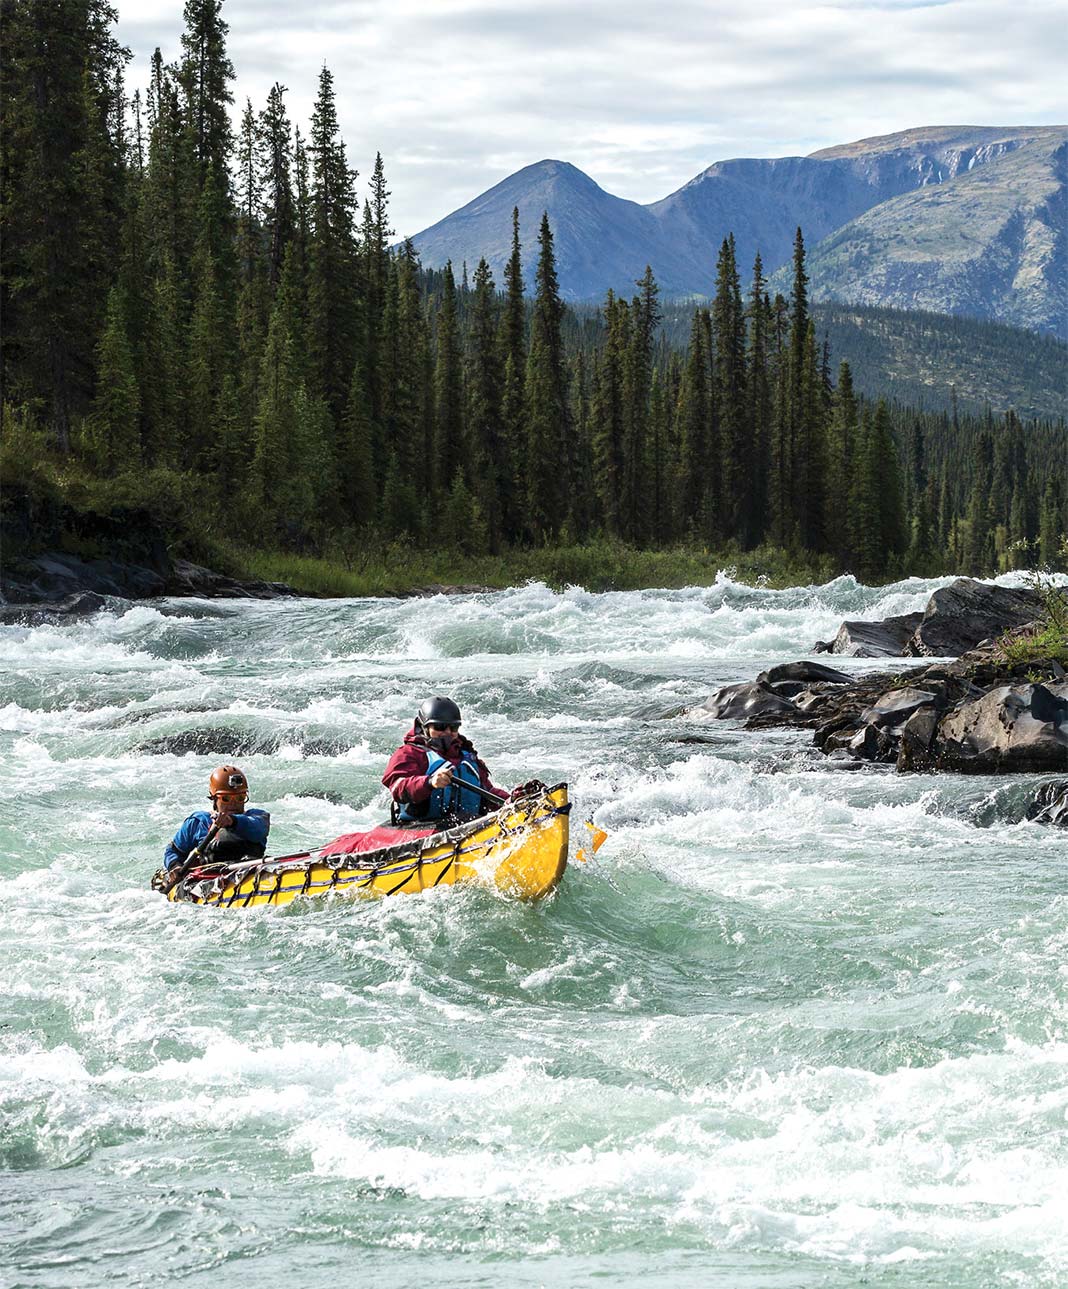 Tandem canoe going through whitewater